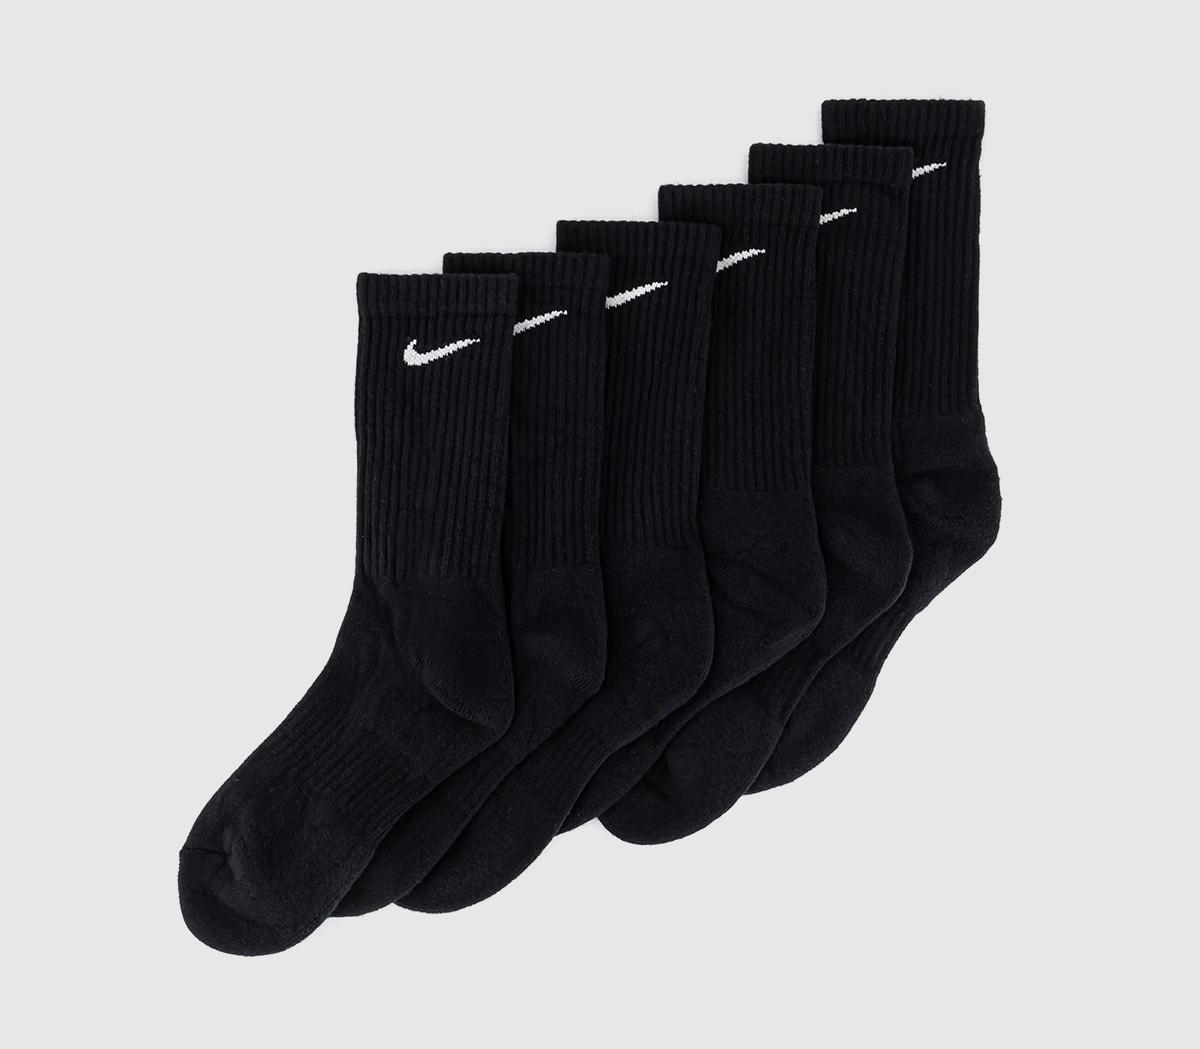 NikeNike Everyday Cushioned Socks 6 PackBlack White